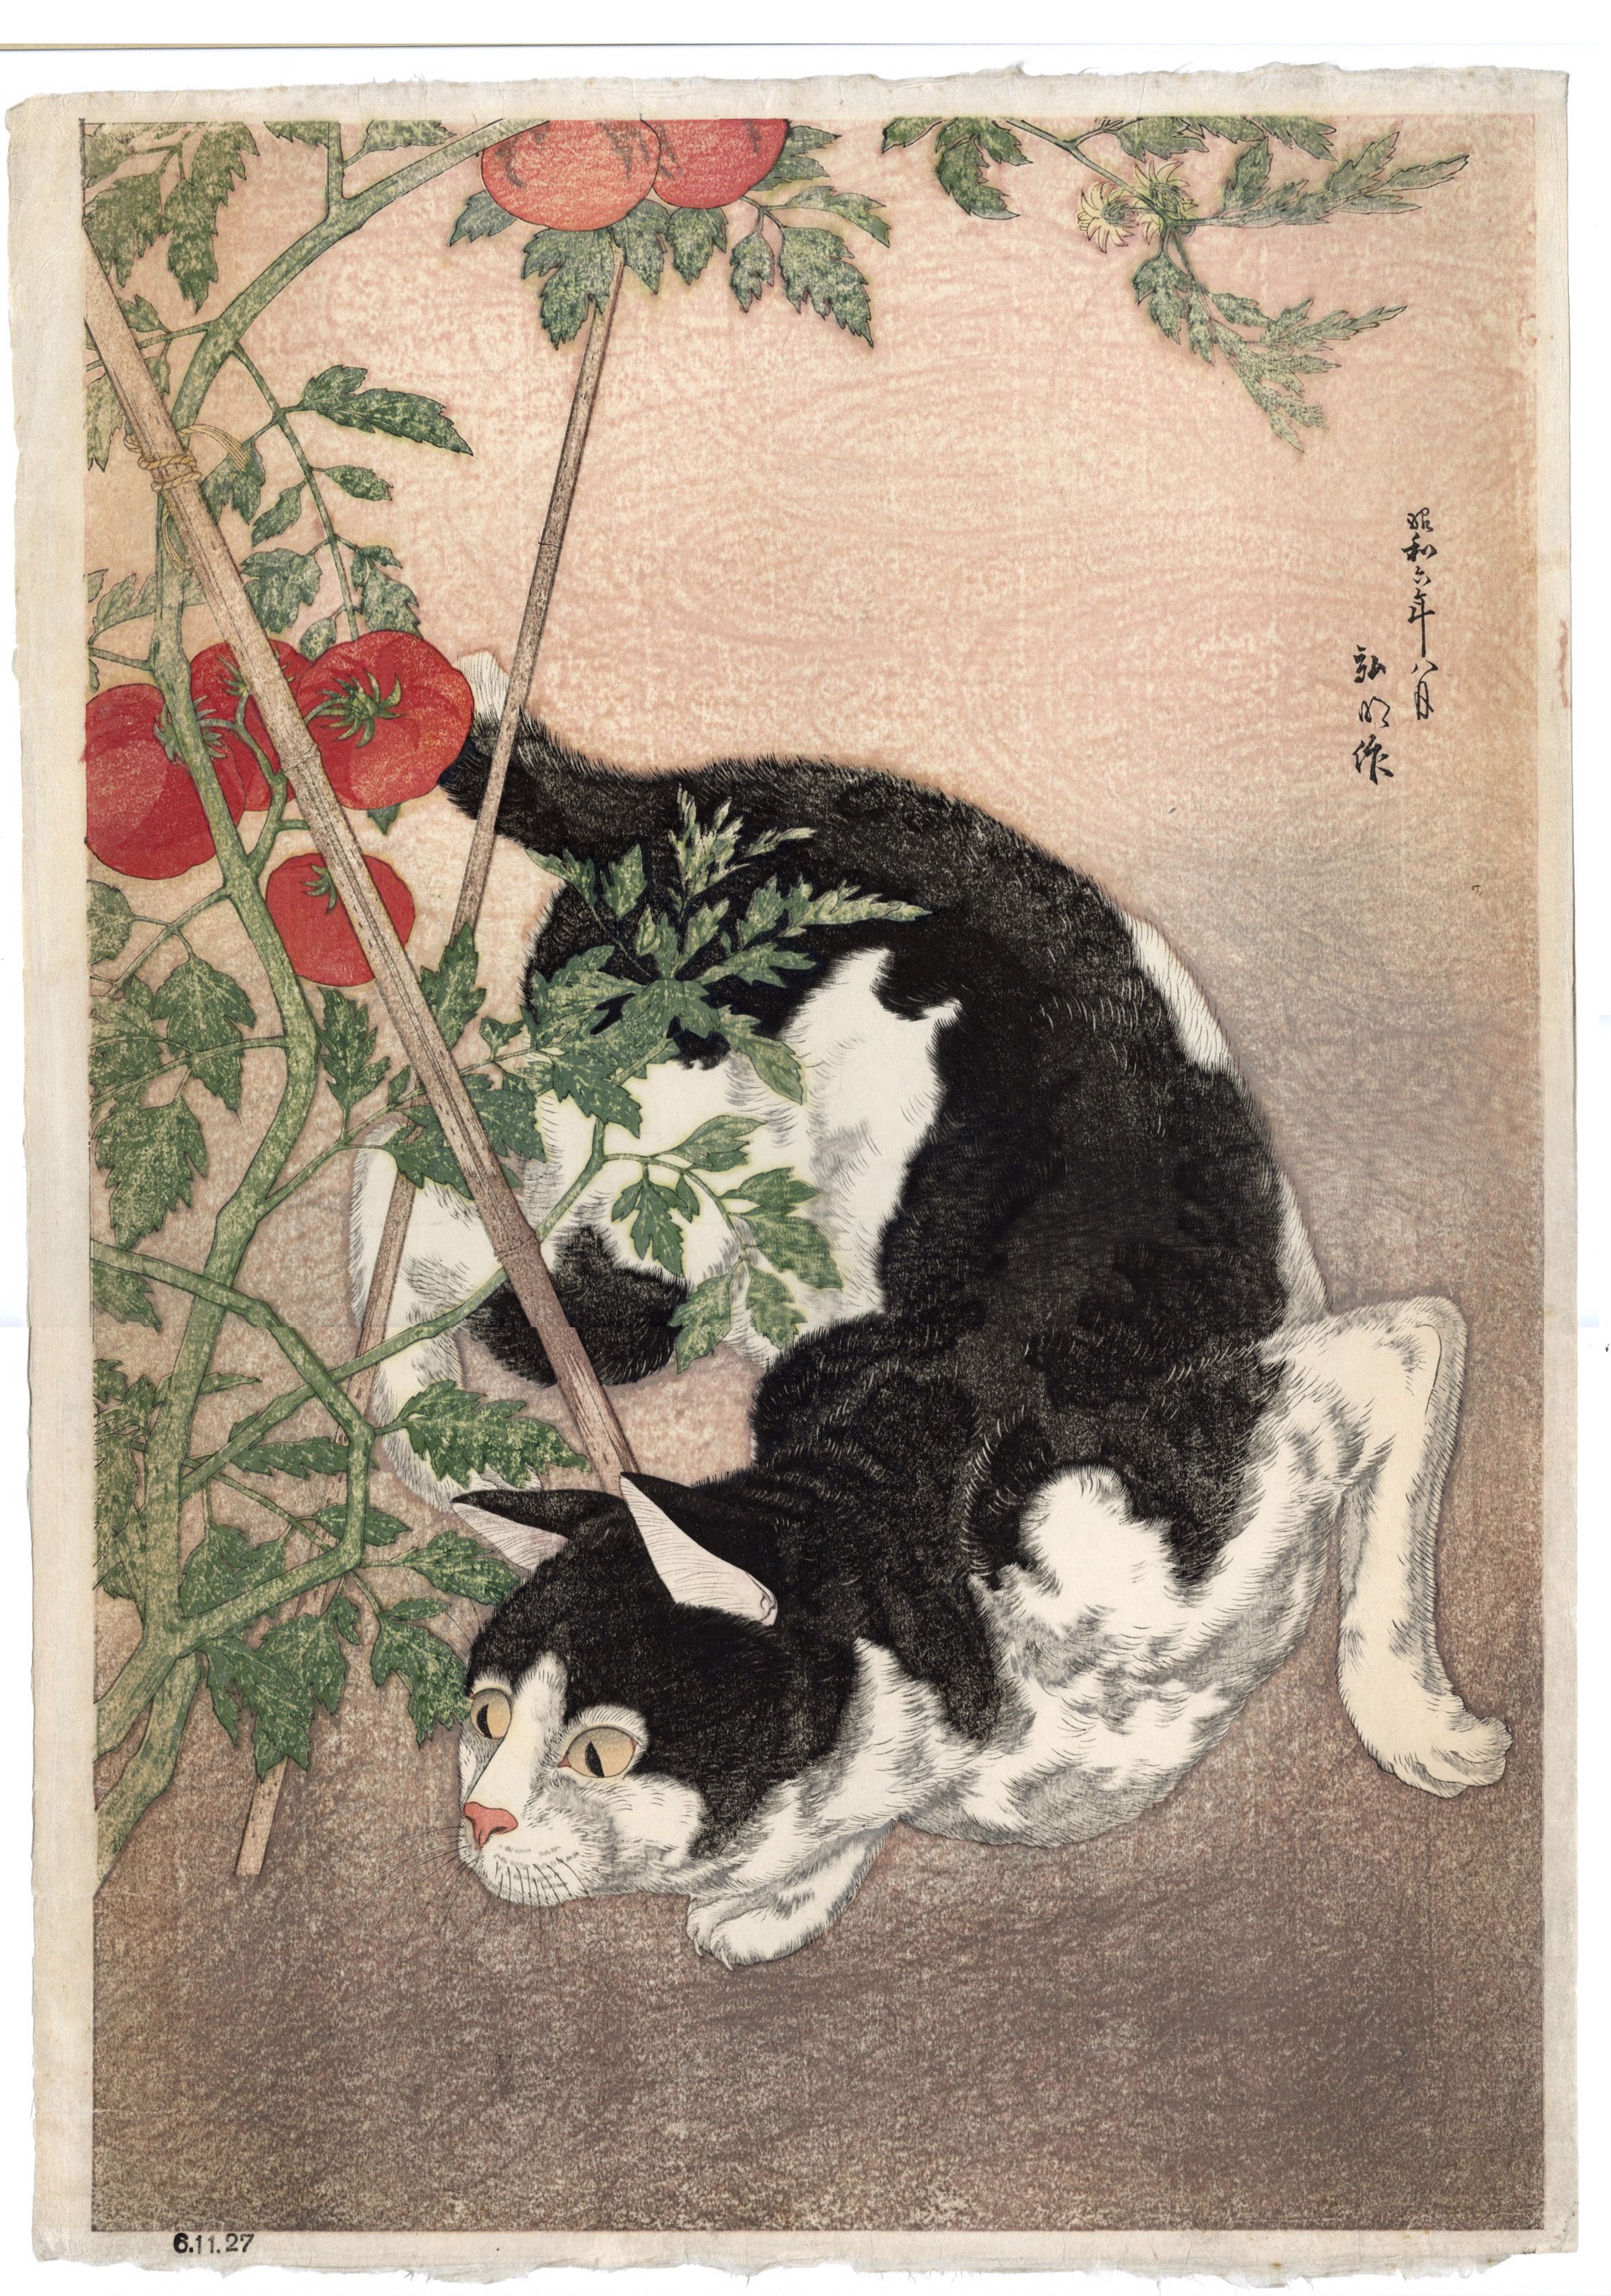 Black Cat and Tomato Plant by Takahashi Hiroaki